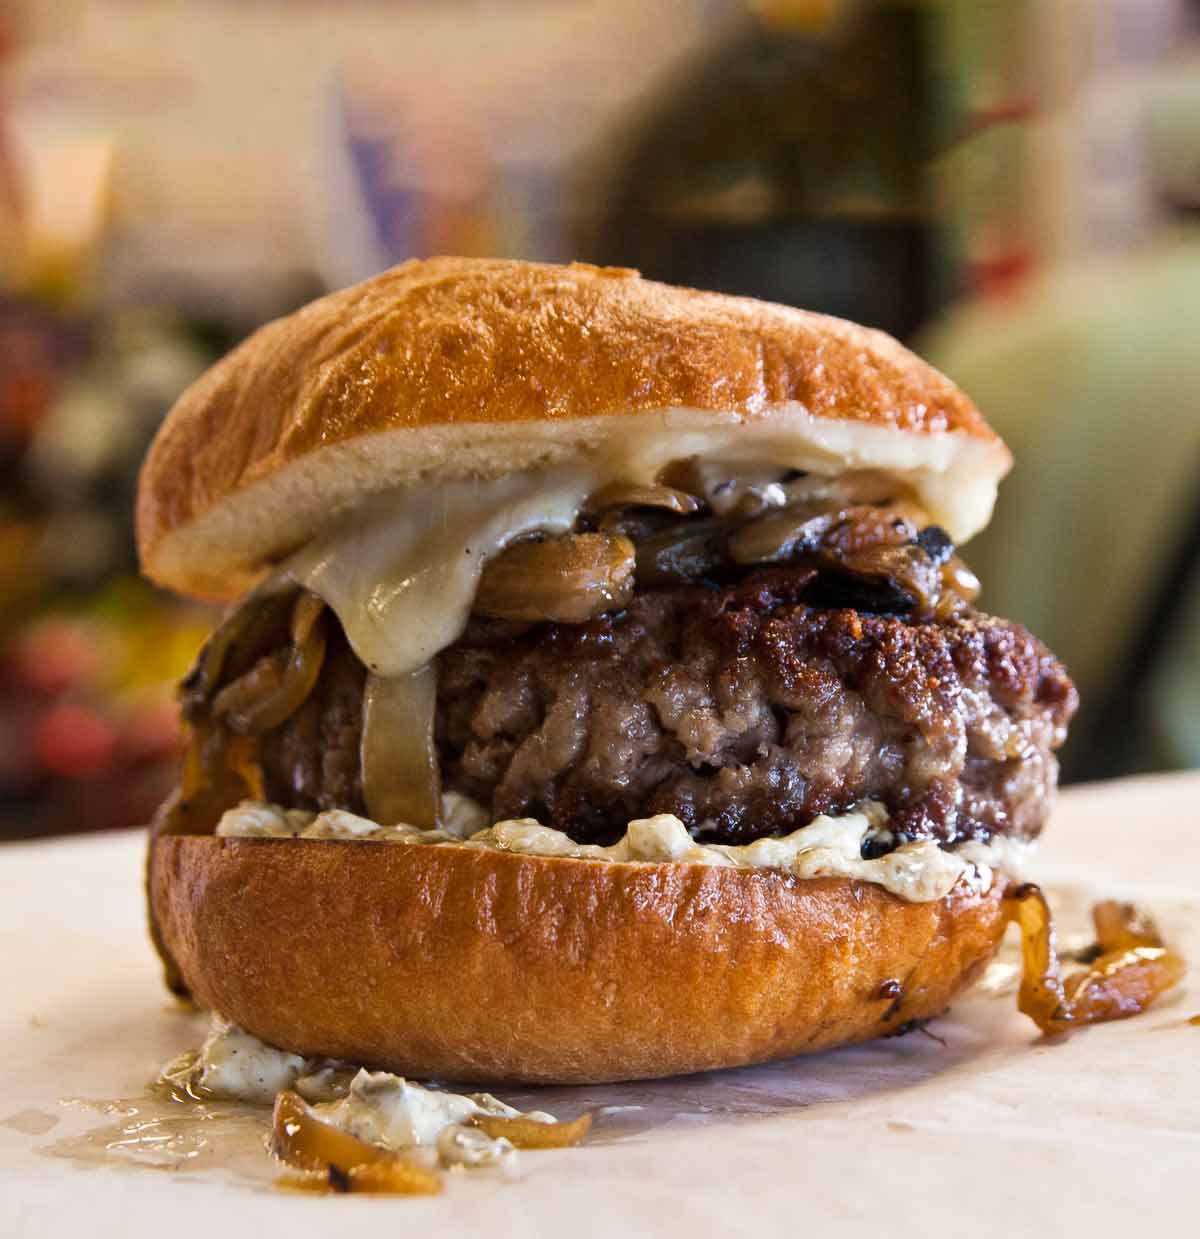 How to Grind Burger Meat for the Juiciest, Beefiest Burgers